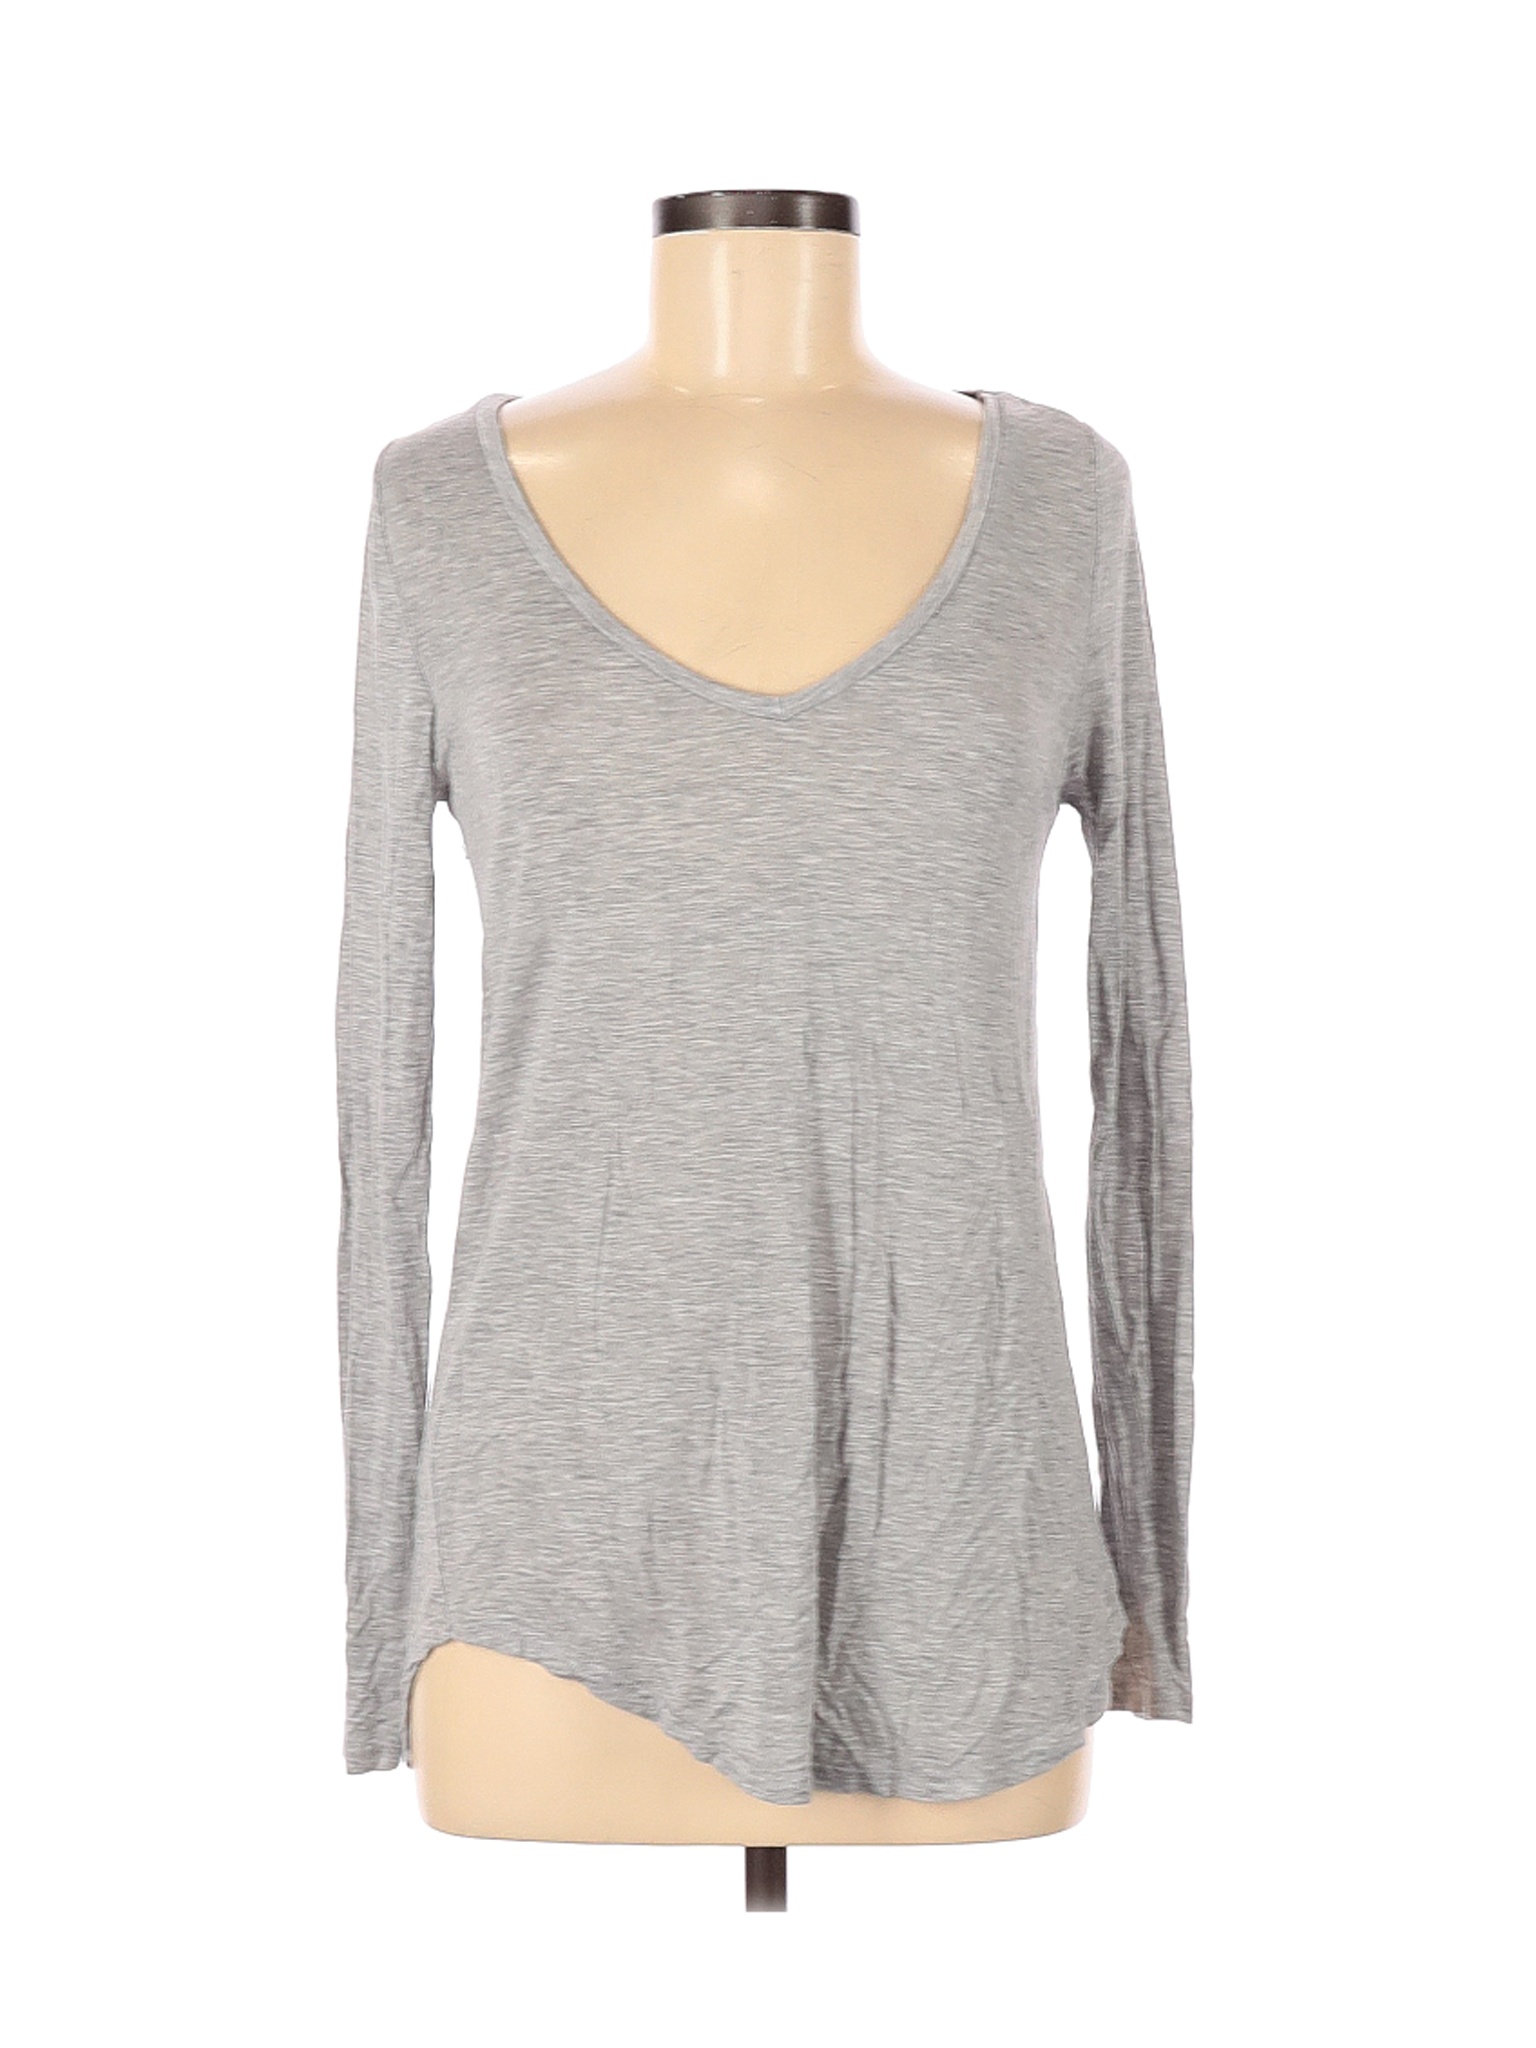 Cotton On Women Gray Long Sleeve T-Shirt XS | eBay